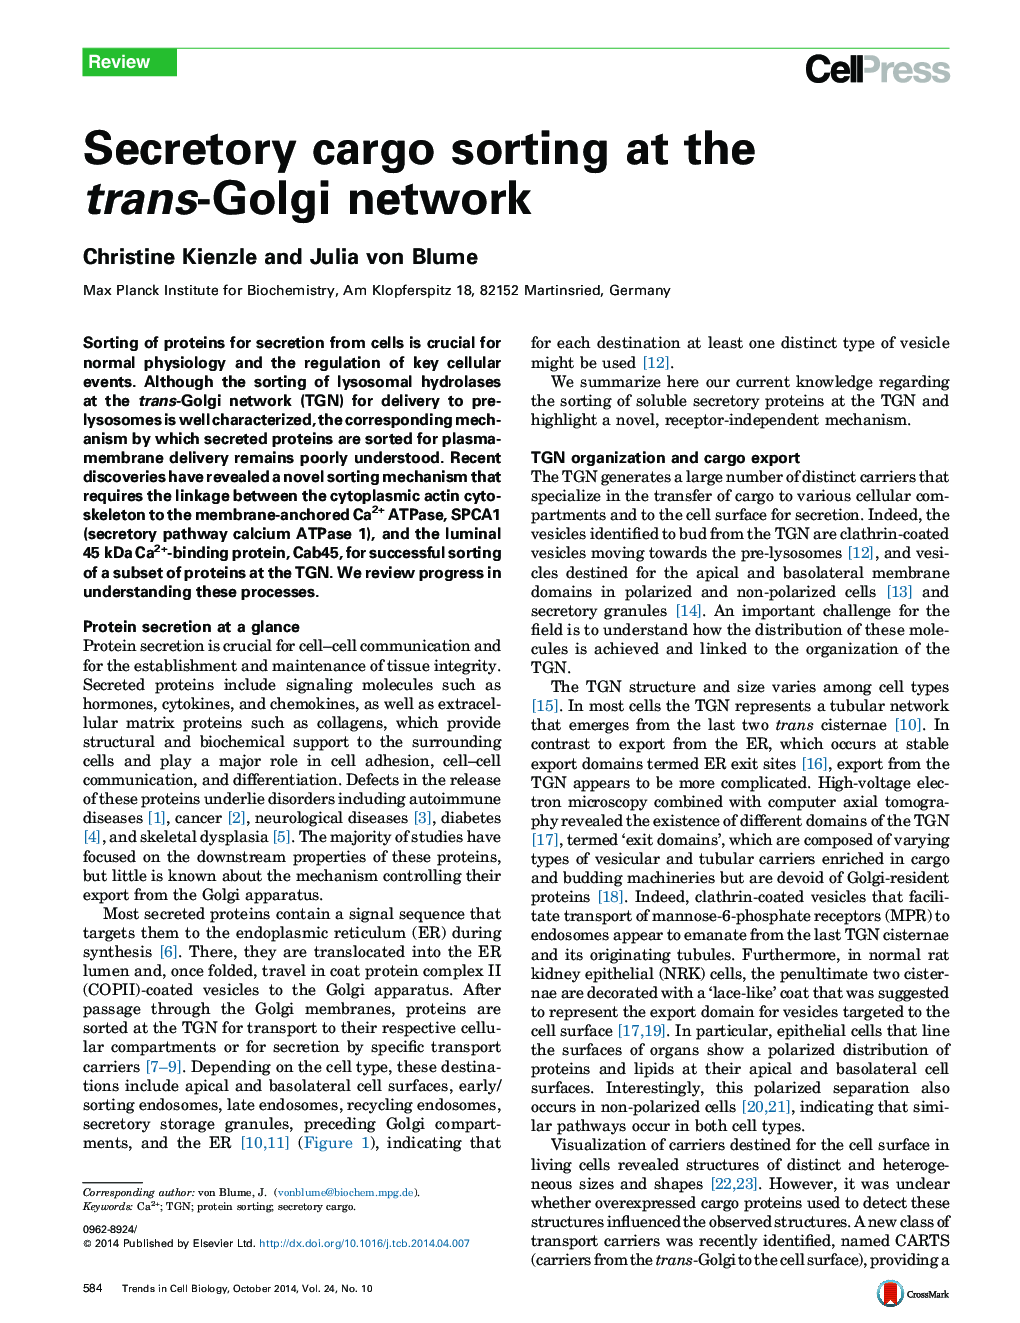 Secretory cargo sorting at the trans-Golgi network